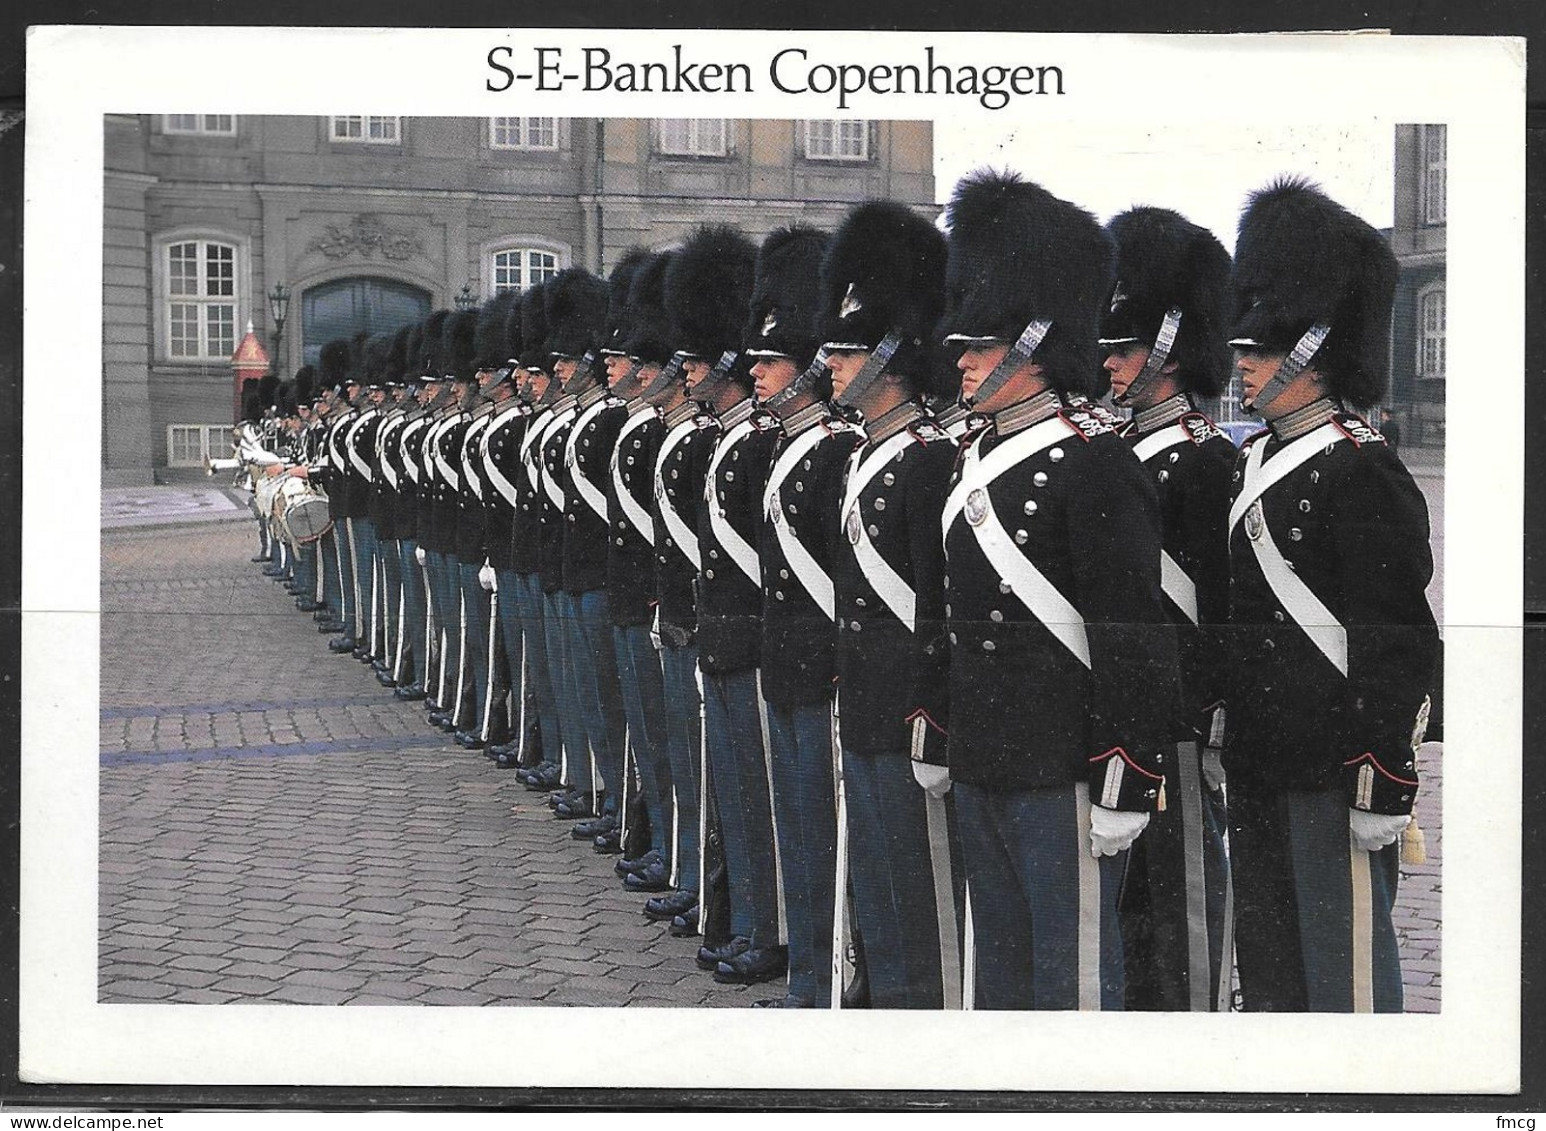 Copenhagen (5"x7" PC) Mailed From Sweden - Denmark